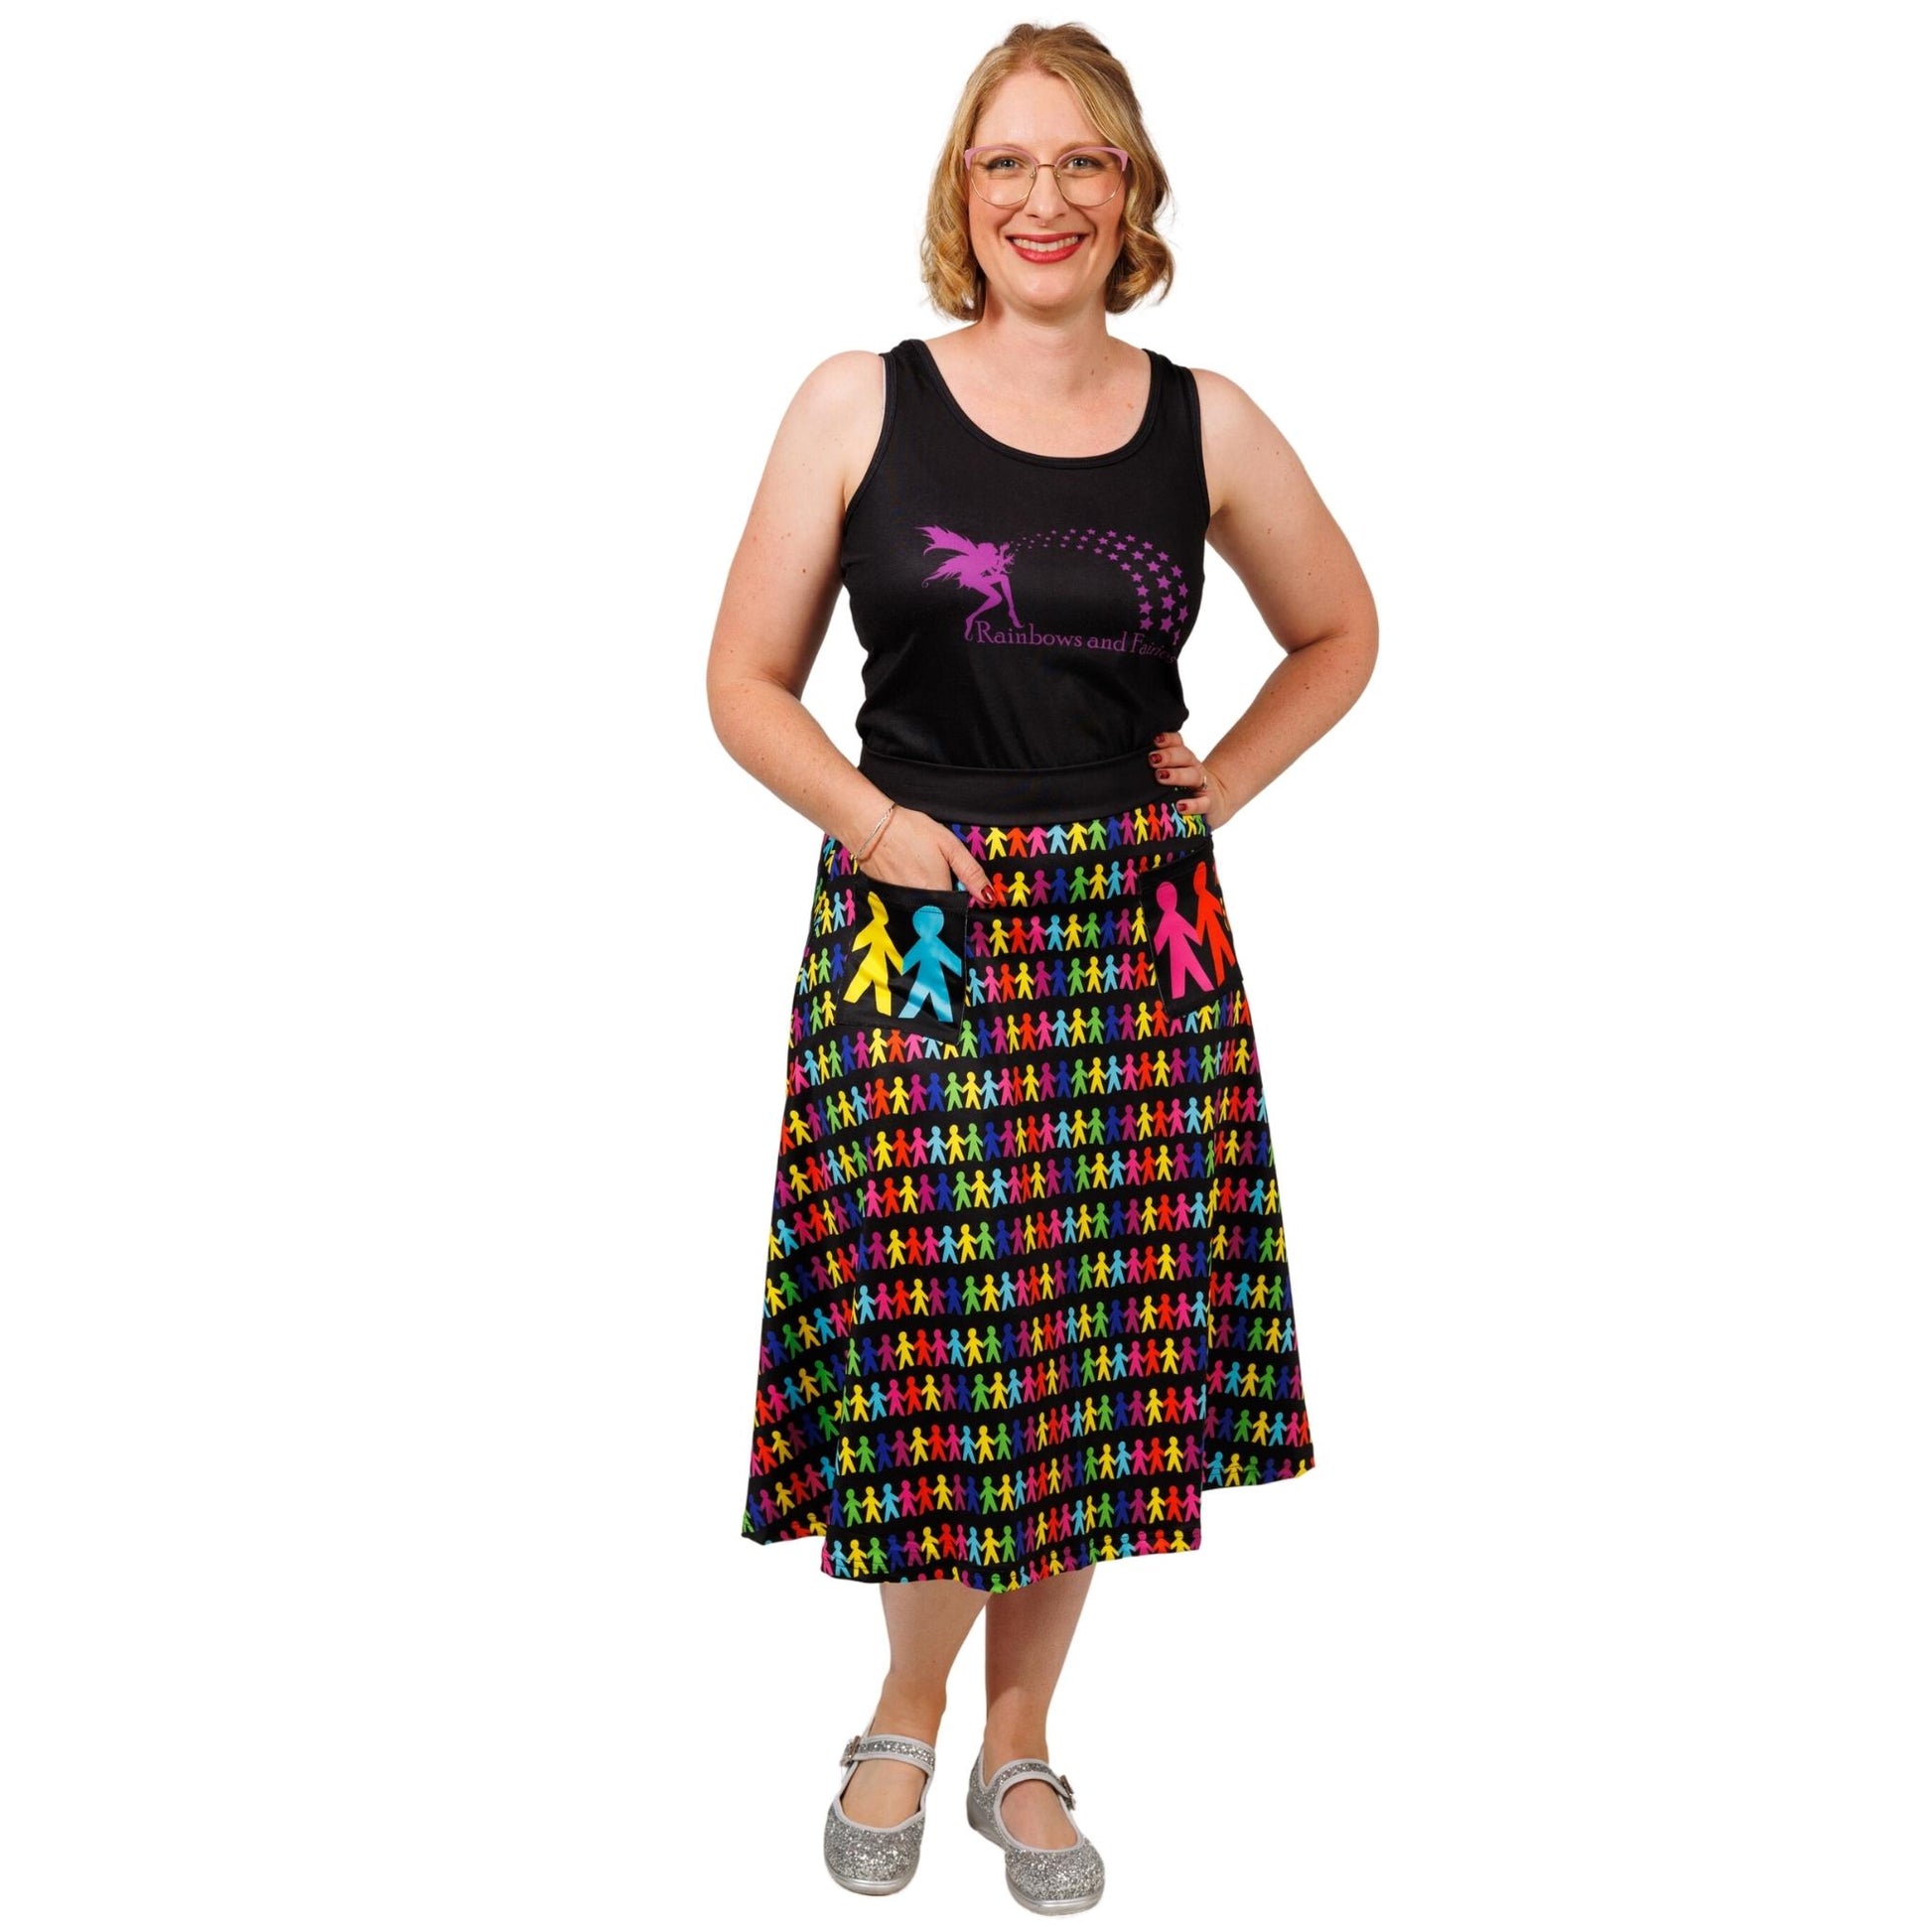 Paperdolls Original Skirt by RainbowsAndFairies.com (Dolls - Paper - Art - Skirt With Pockets - Aline Skirt - Vintage Inspired) - SKU: CL_OSKRT_PAPER_ORG - Pic 03